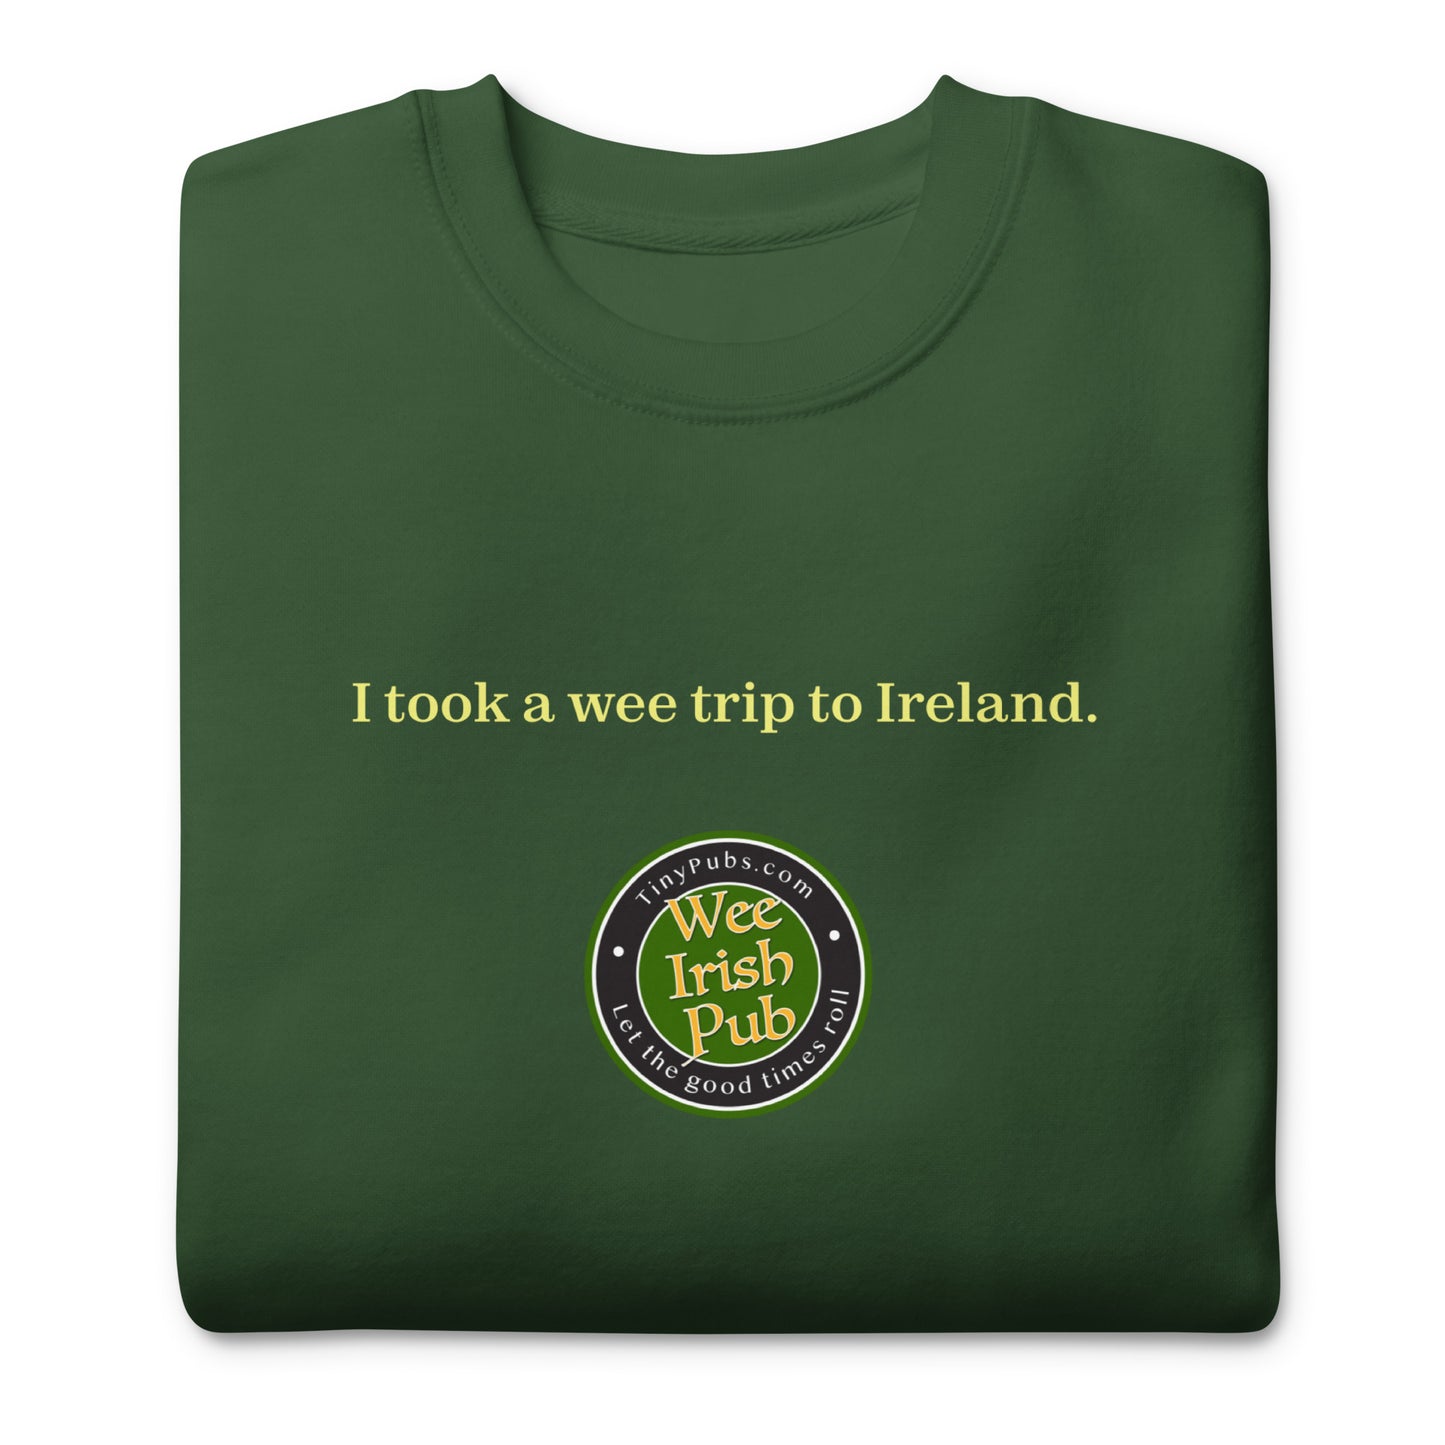 Wee Irish Pub "I took a wee trip to Ireland" Premium Crewneck Sweatshirt